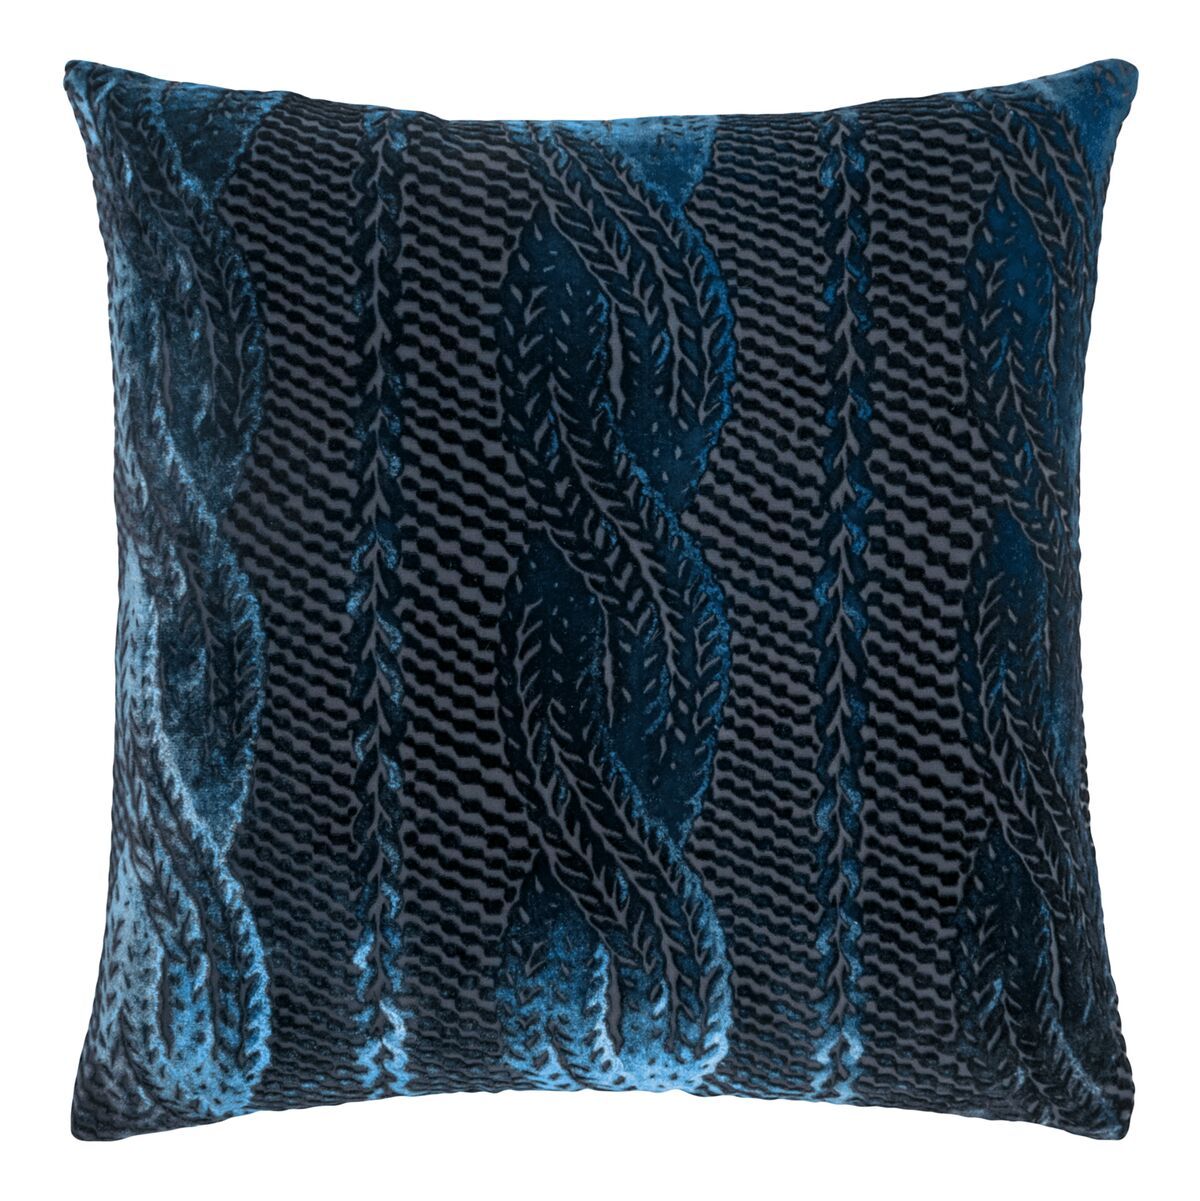 Cobalt Black Cable Knit Pillow by Kevin O'Brien Studio